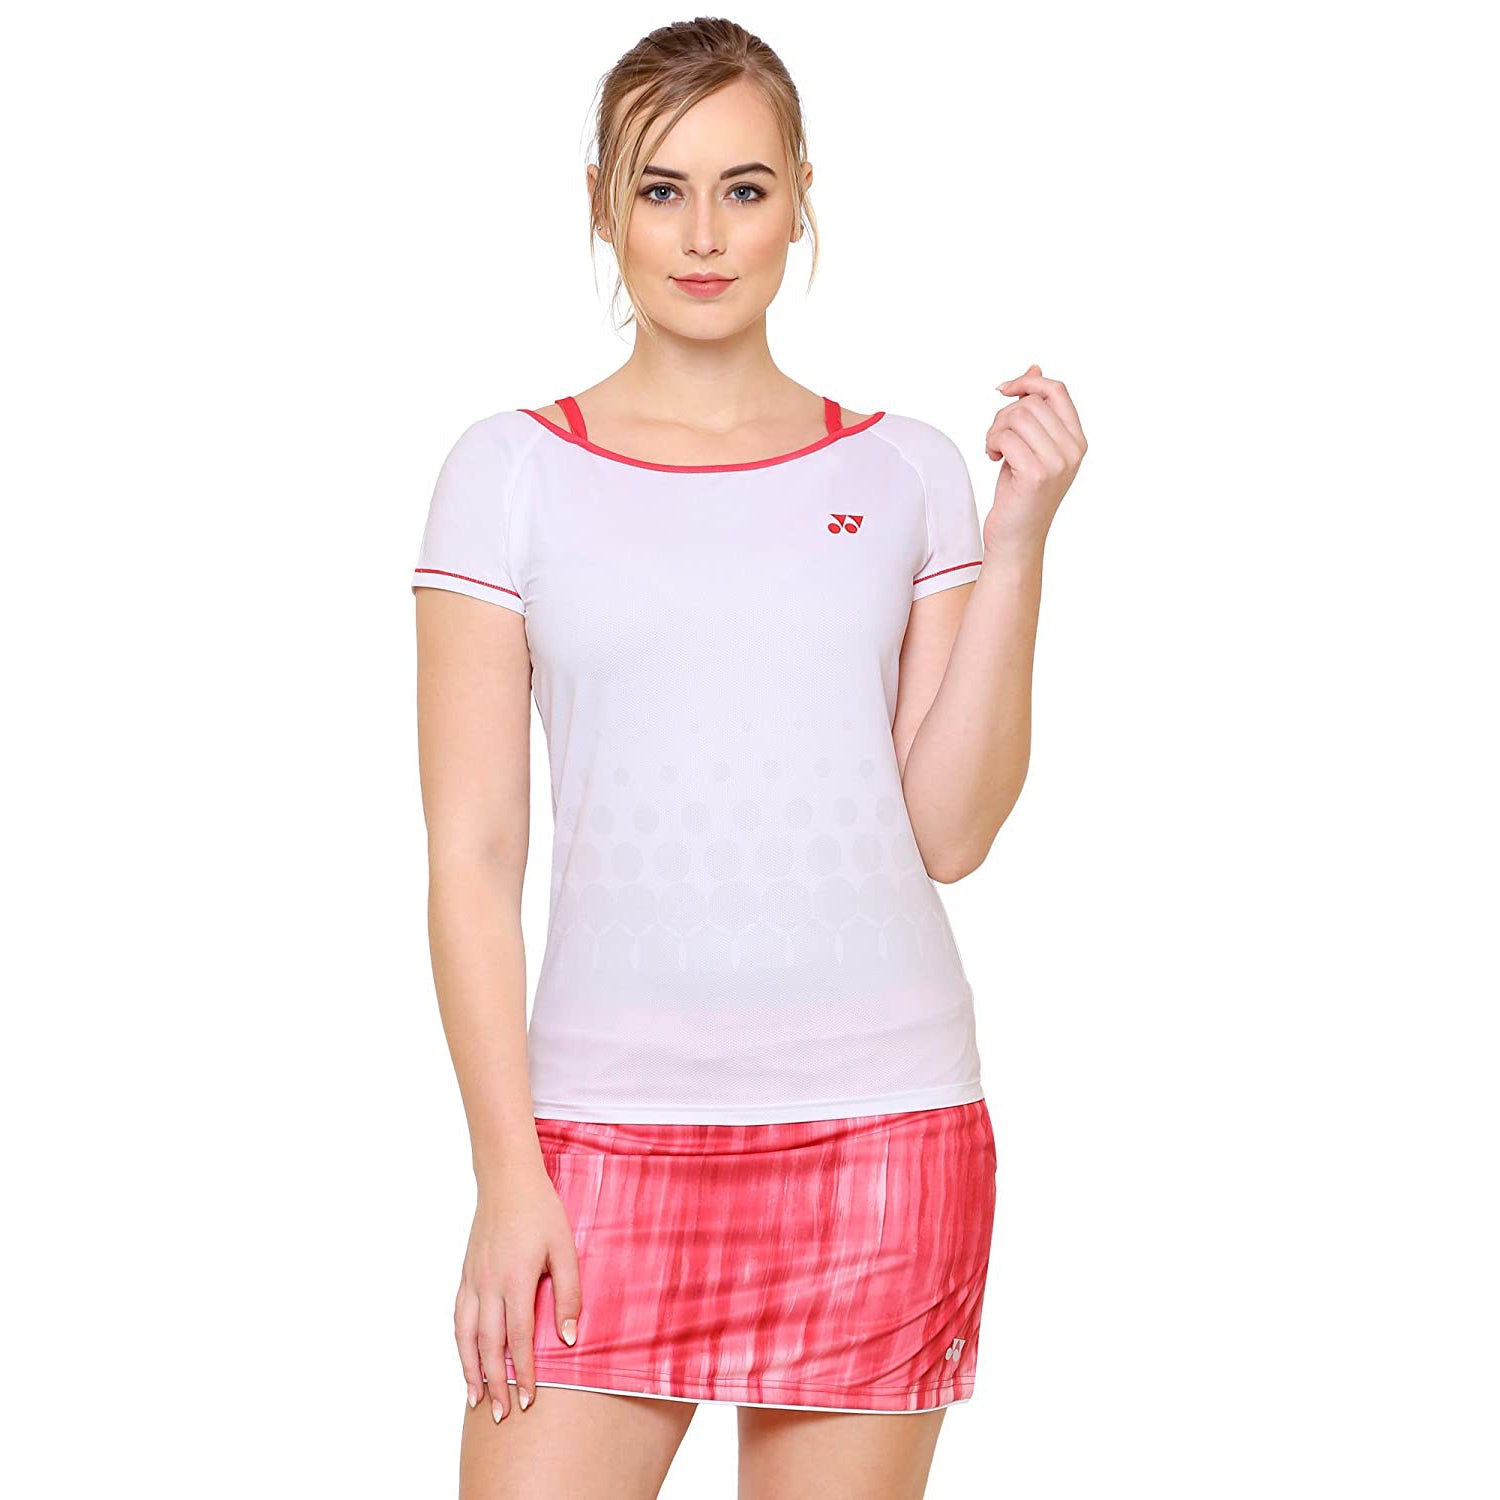 Yonex 20282 Round Neck T Shirt for Women, White - Best Price online Prokicksports.com